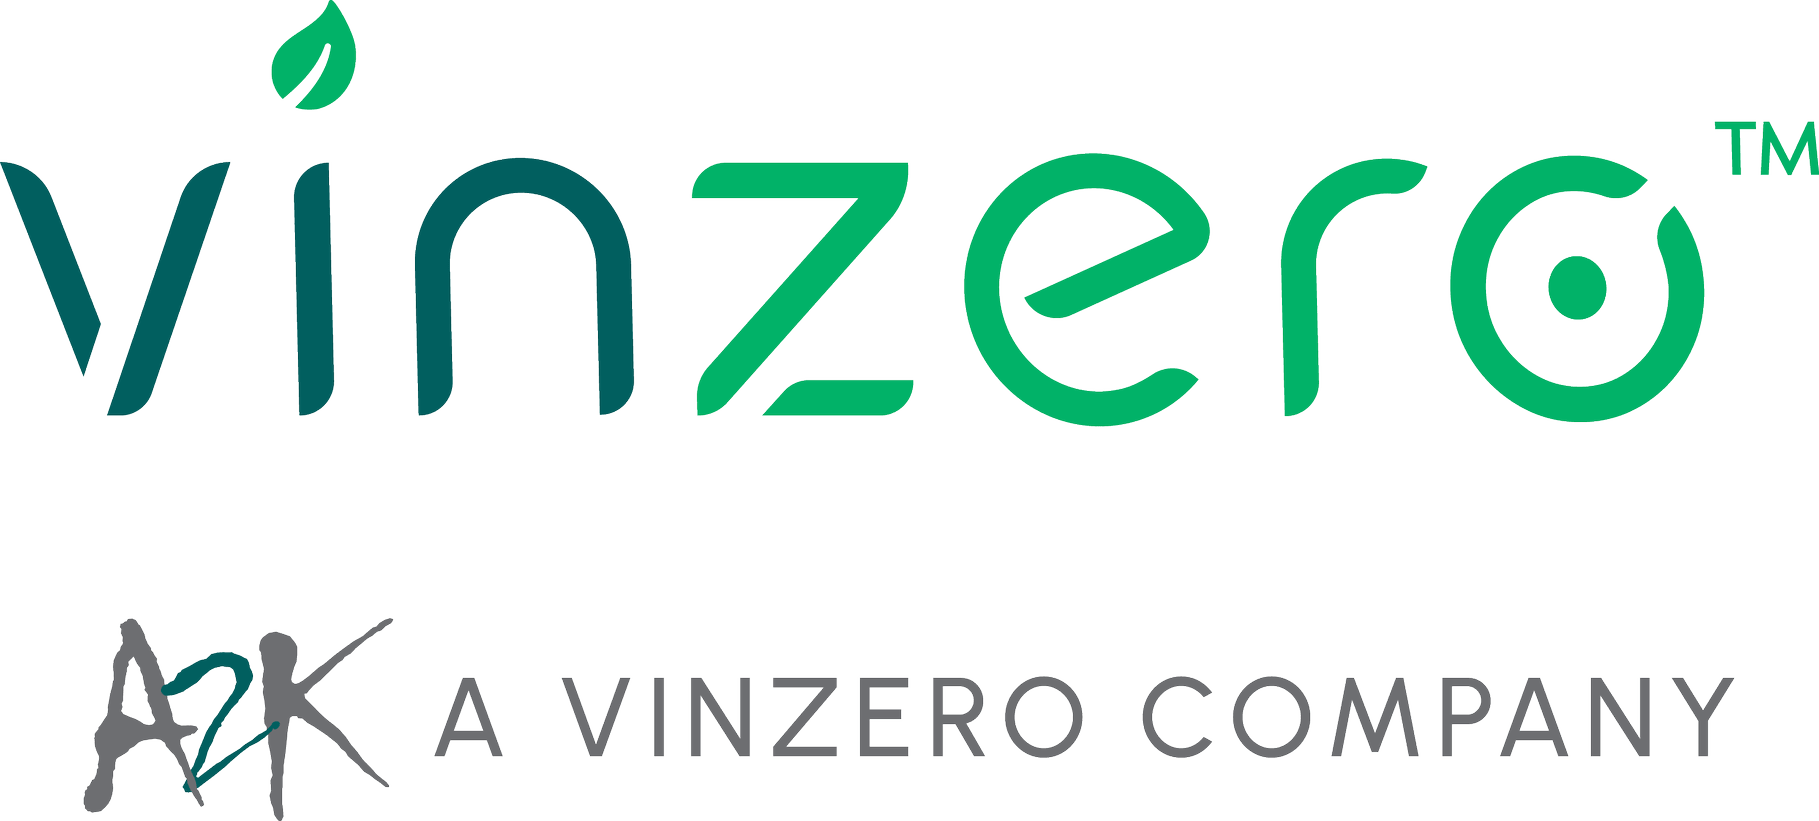 Vinzero A2K new logo